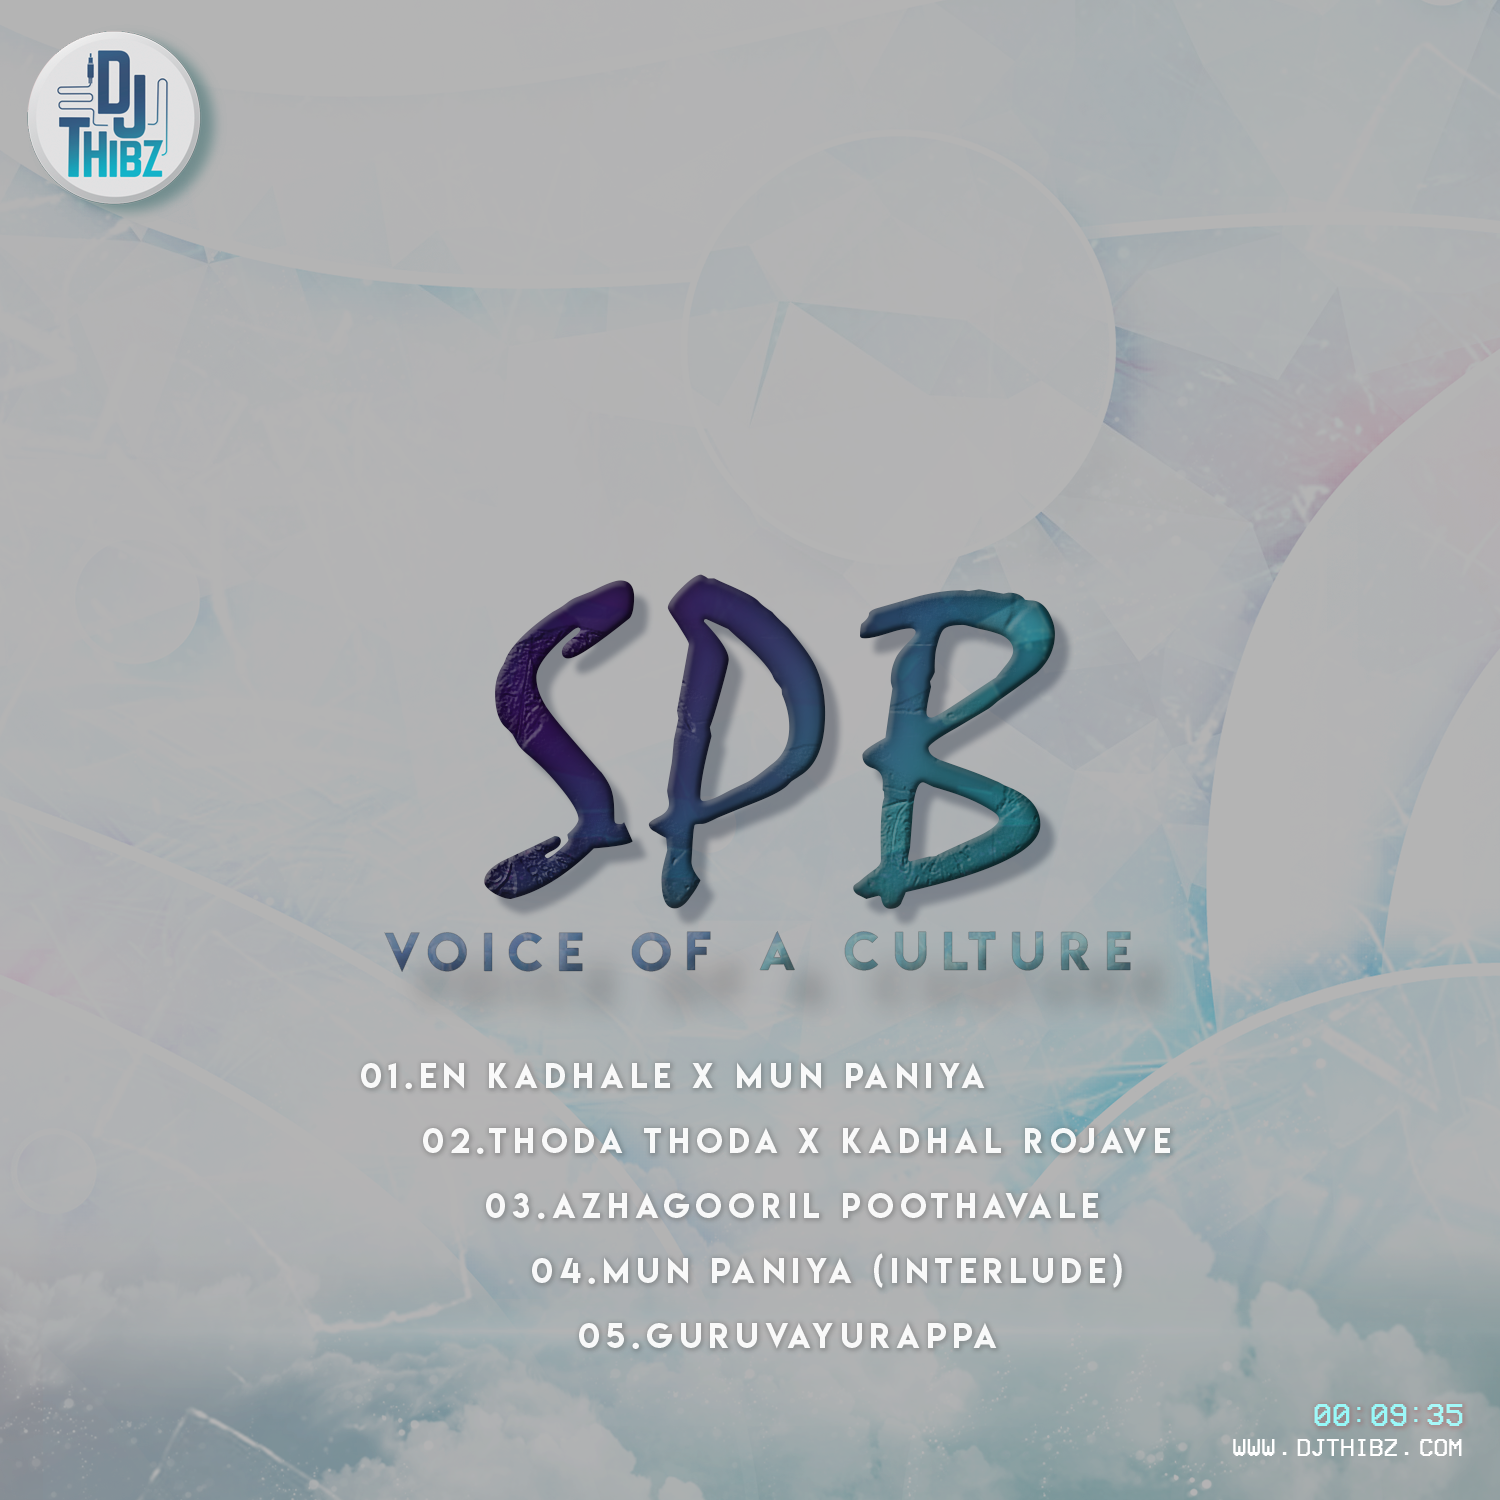 SPB, Voice of a Culture - Dj Thibz